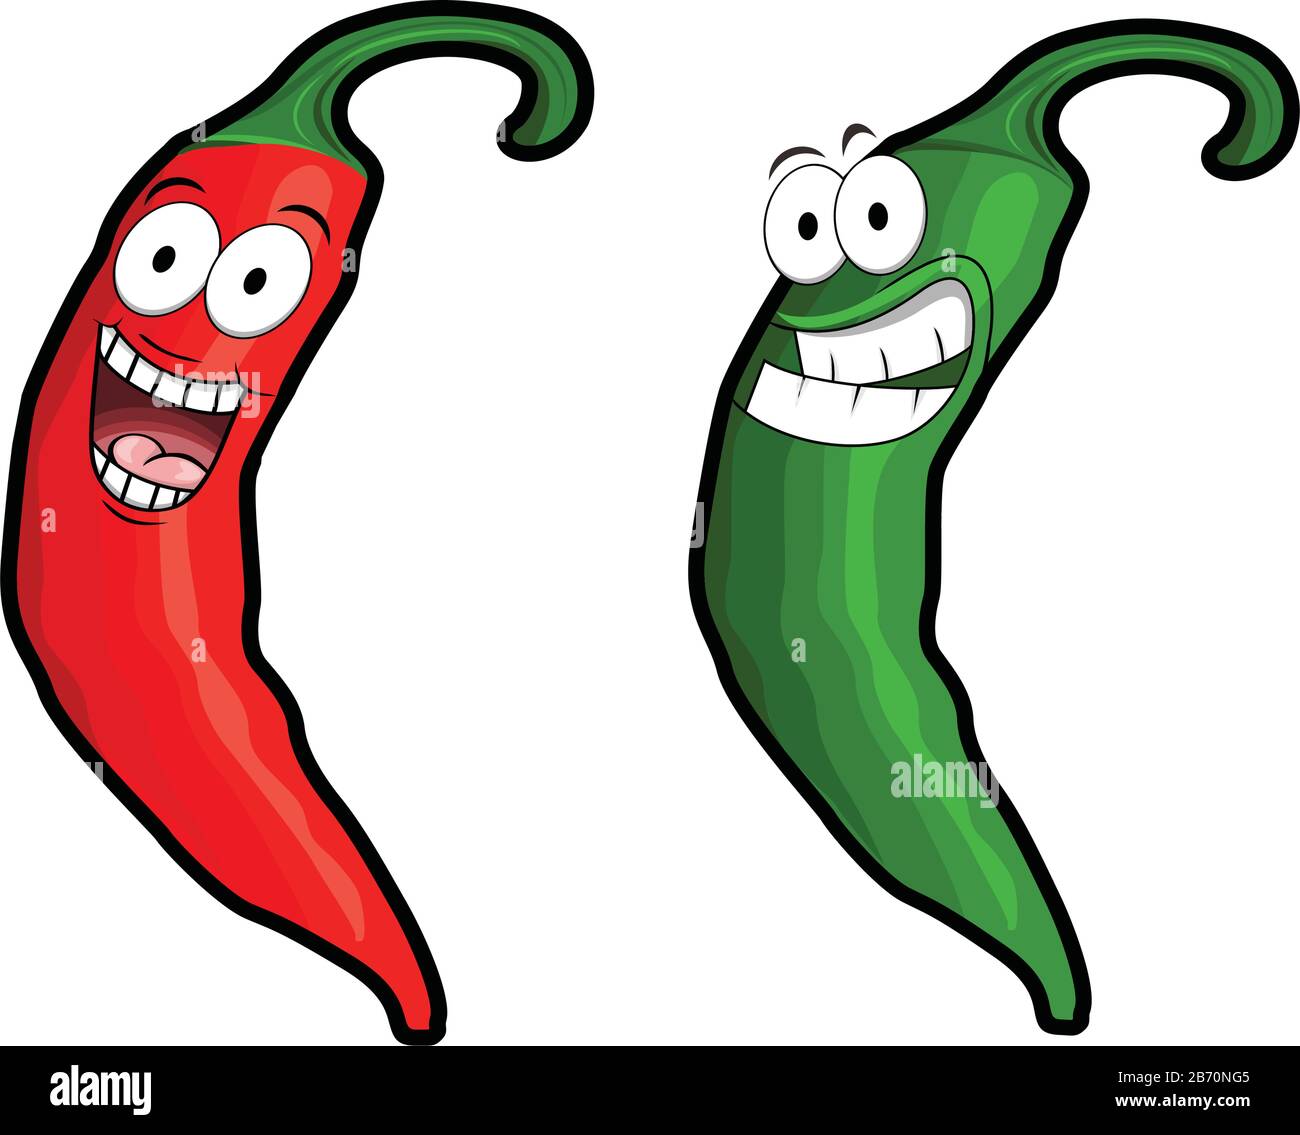 Vektor-Illustration von lustigen Chili, Cartoon-rote und grüne Chili-Vektor-Illustration für Logo-Zwecke Stock Vektor